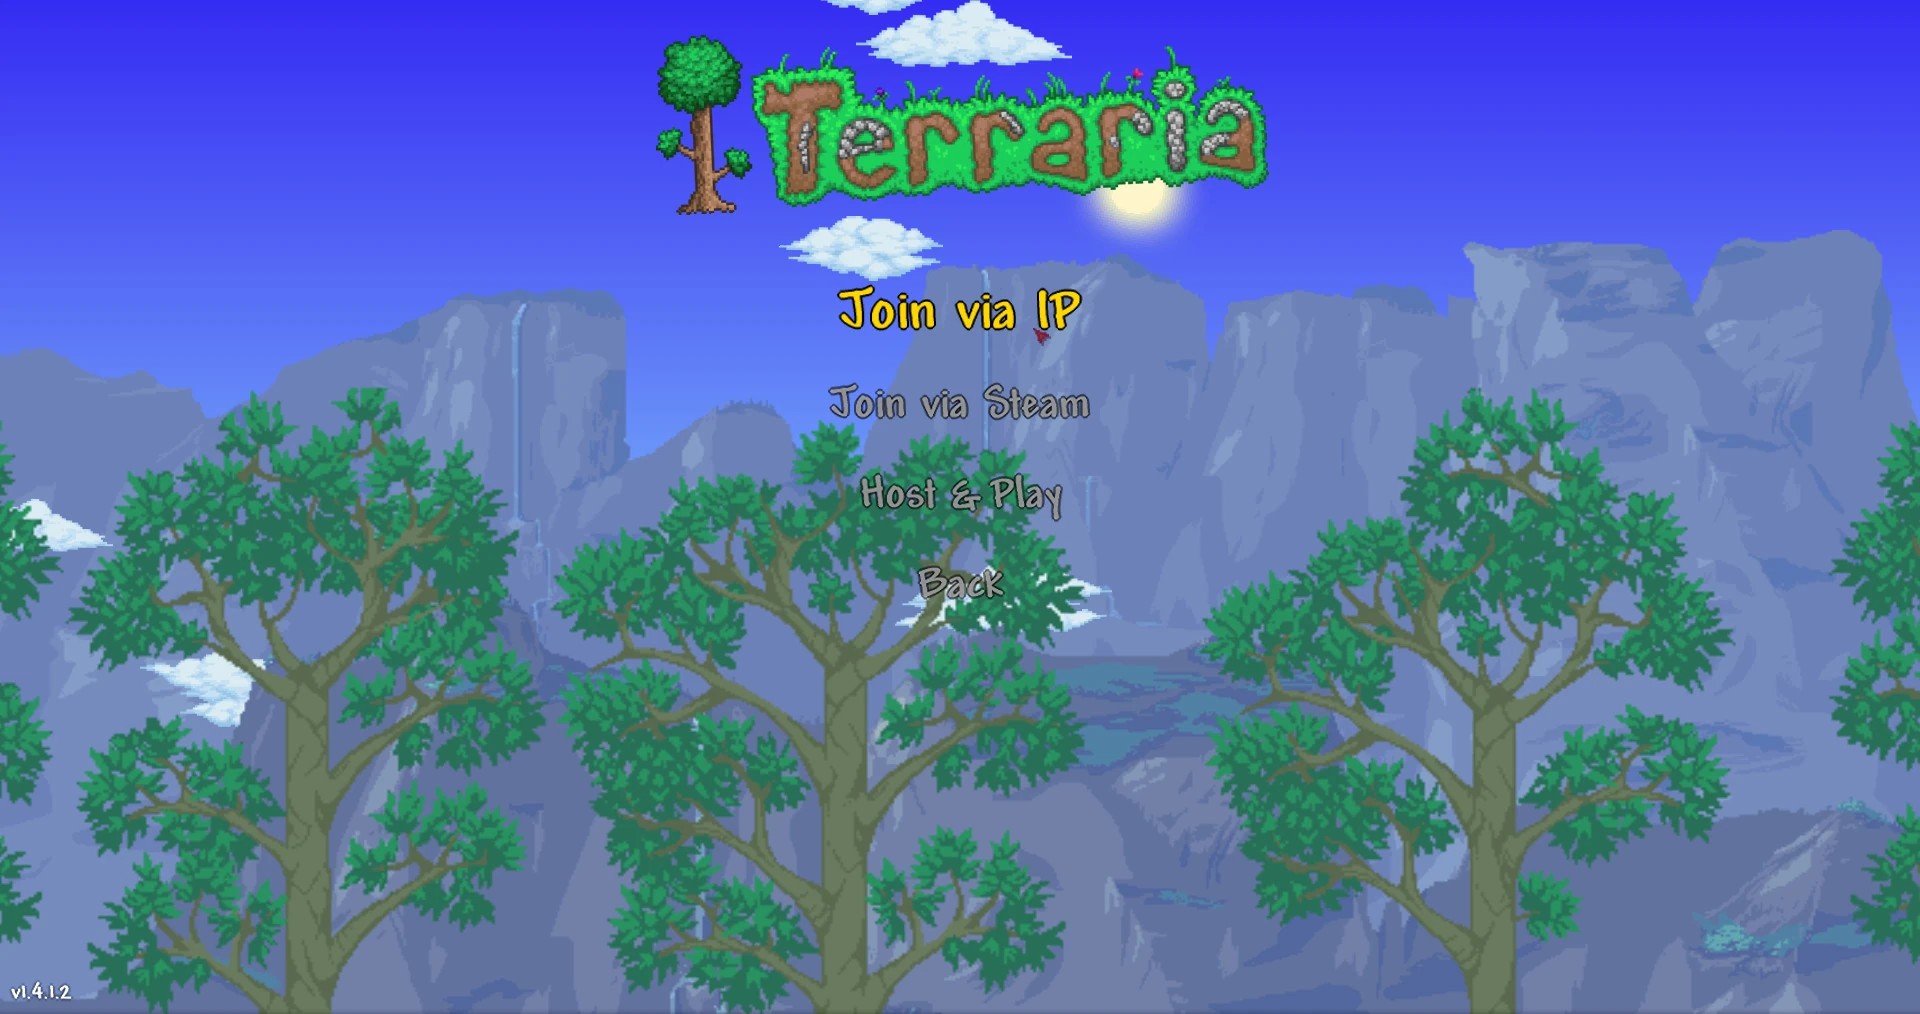 The Terraria multiplayer menu